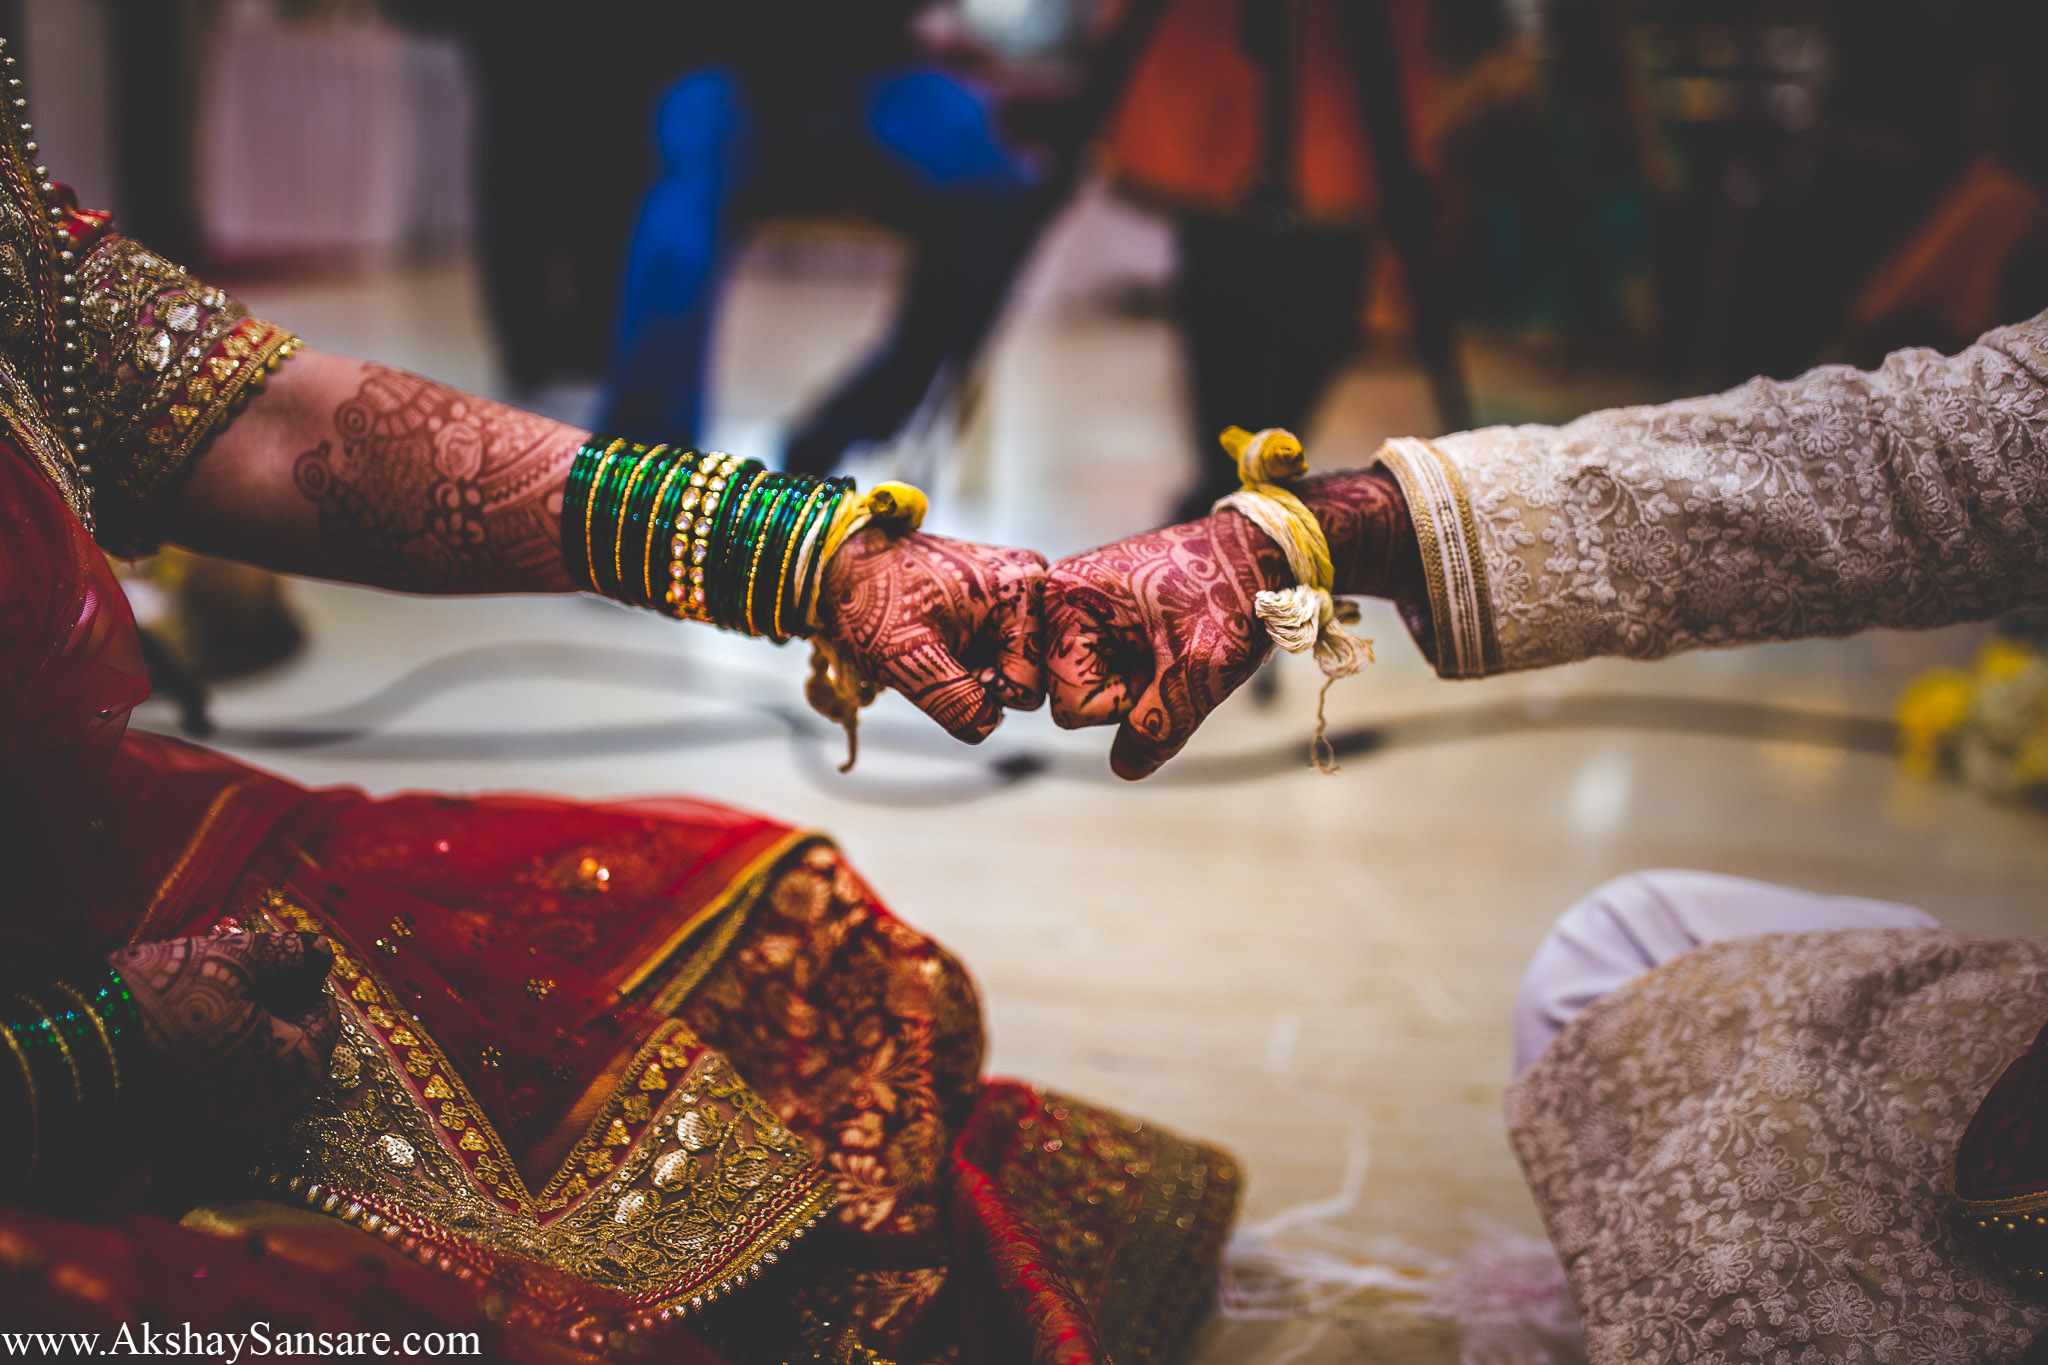 Ajay & Devika Akshay Sansare Photography Best Candid wedding photographer in mumbai india21.jpg